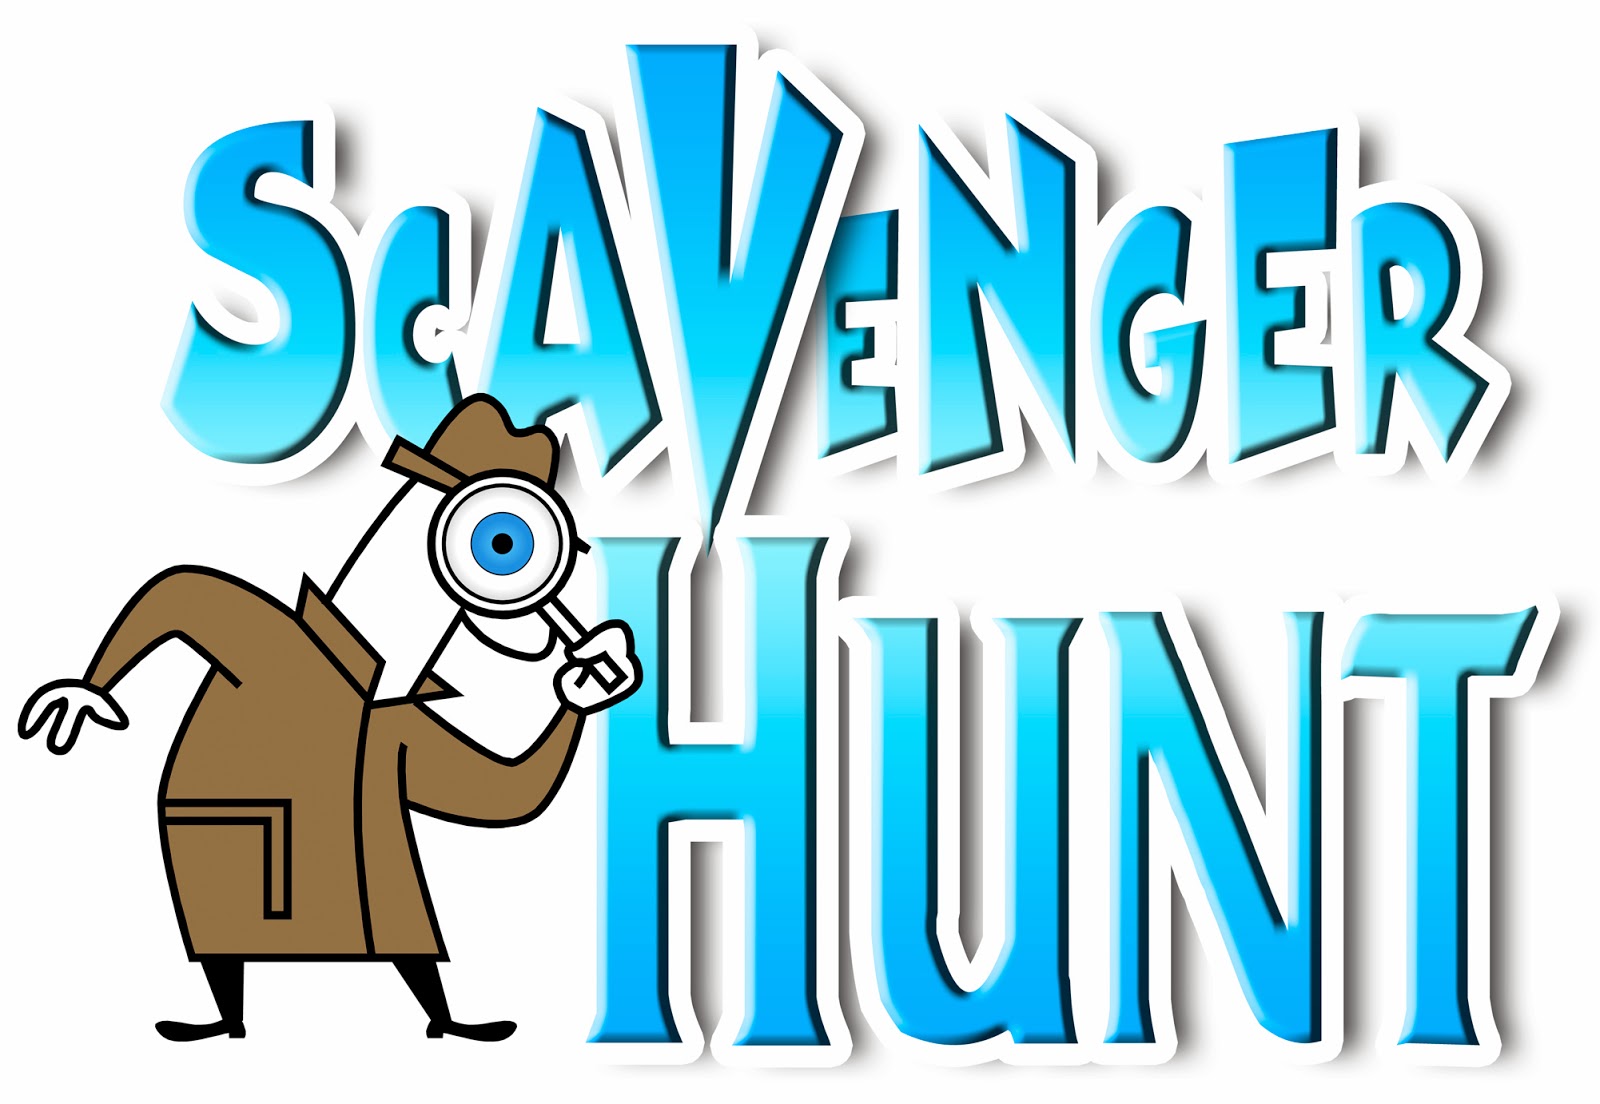 Scavenger hunt clipart free download clip art jpg